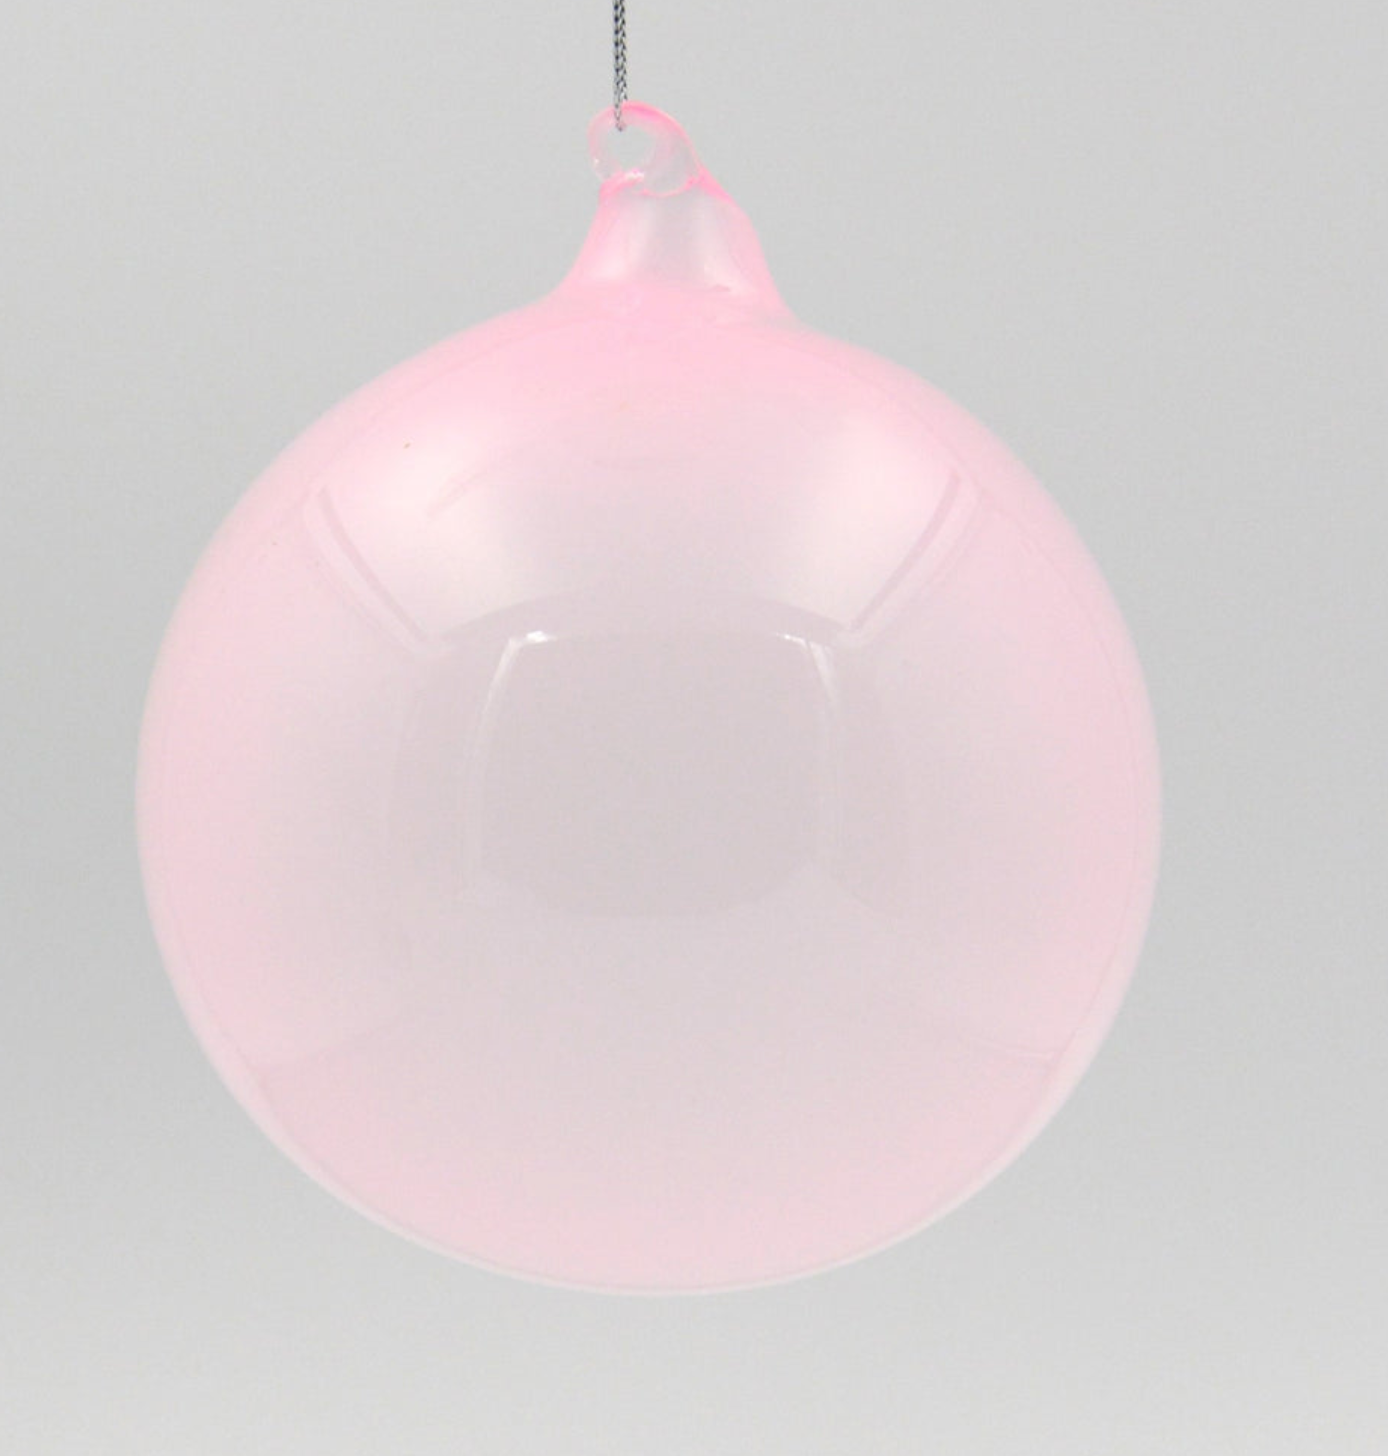 Jim Marvin Bubblegum Ornament Pink Candy